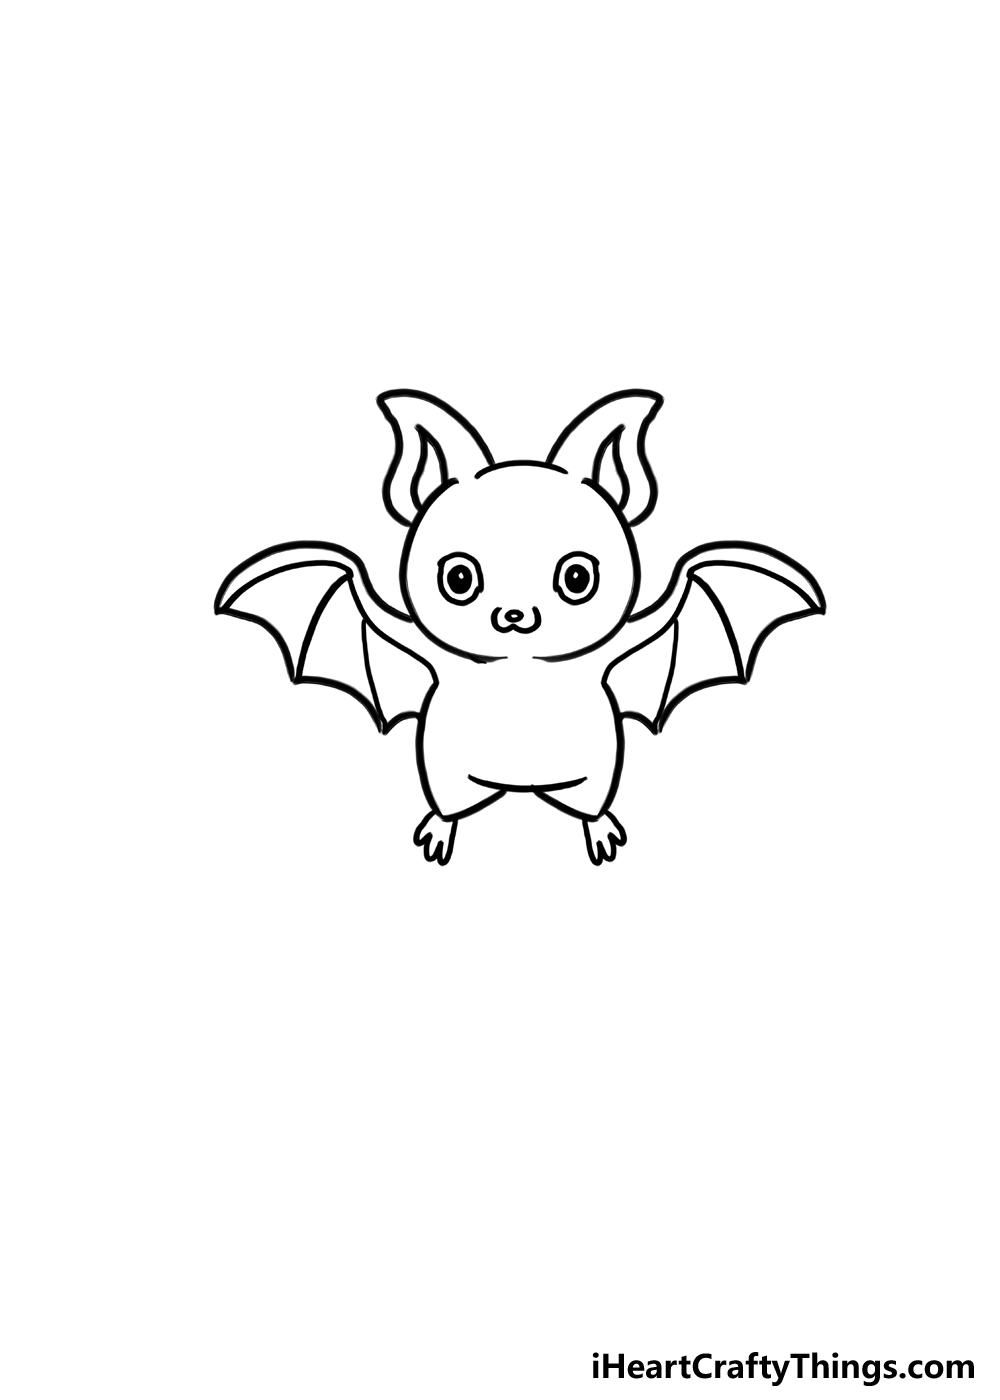 How to Draw A Cute Bat step 5